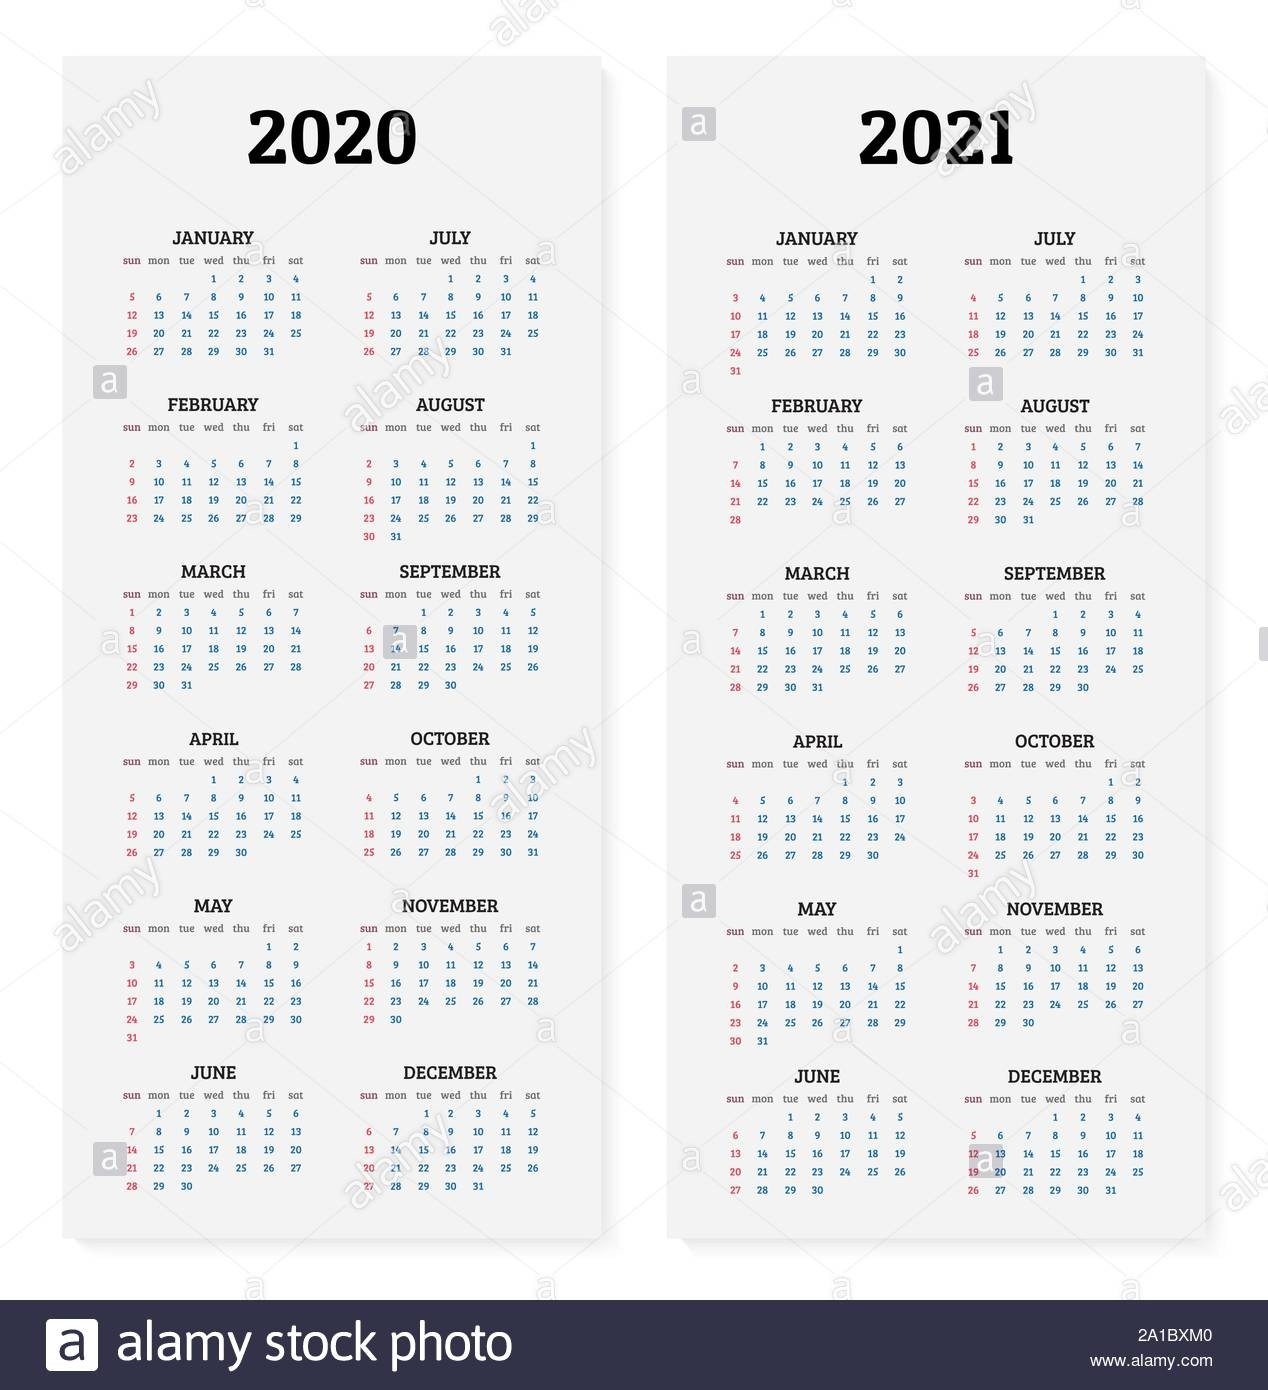 2020 And 2021 Annual Calendar. Vector Illustration Stock  Calenadrio Juliano 2020